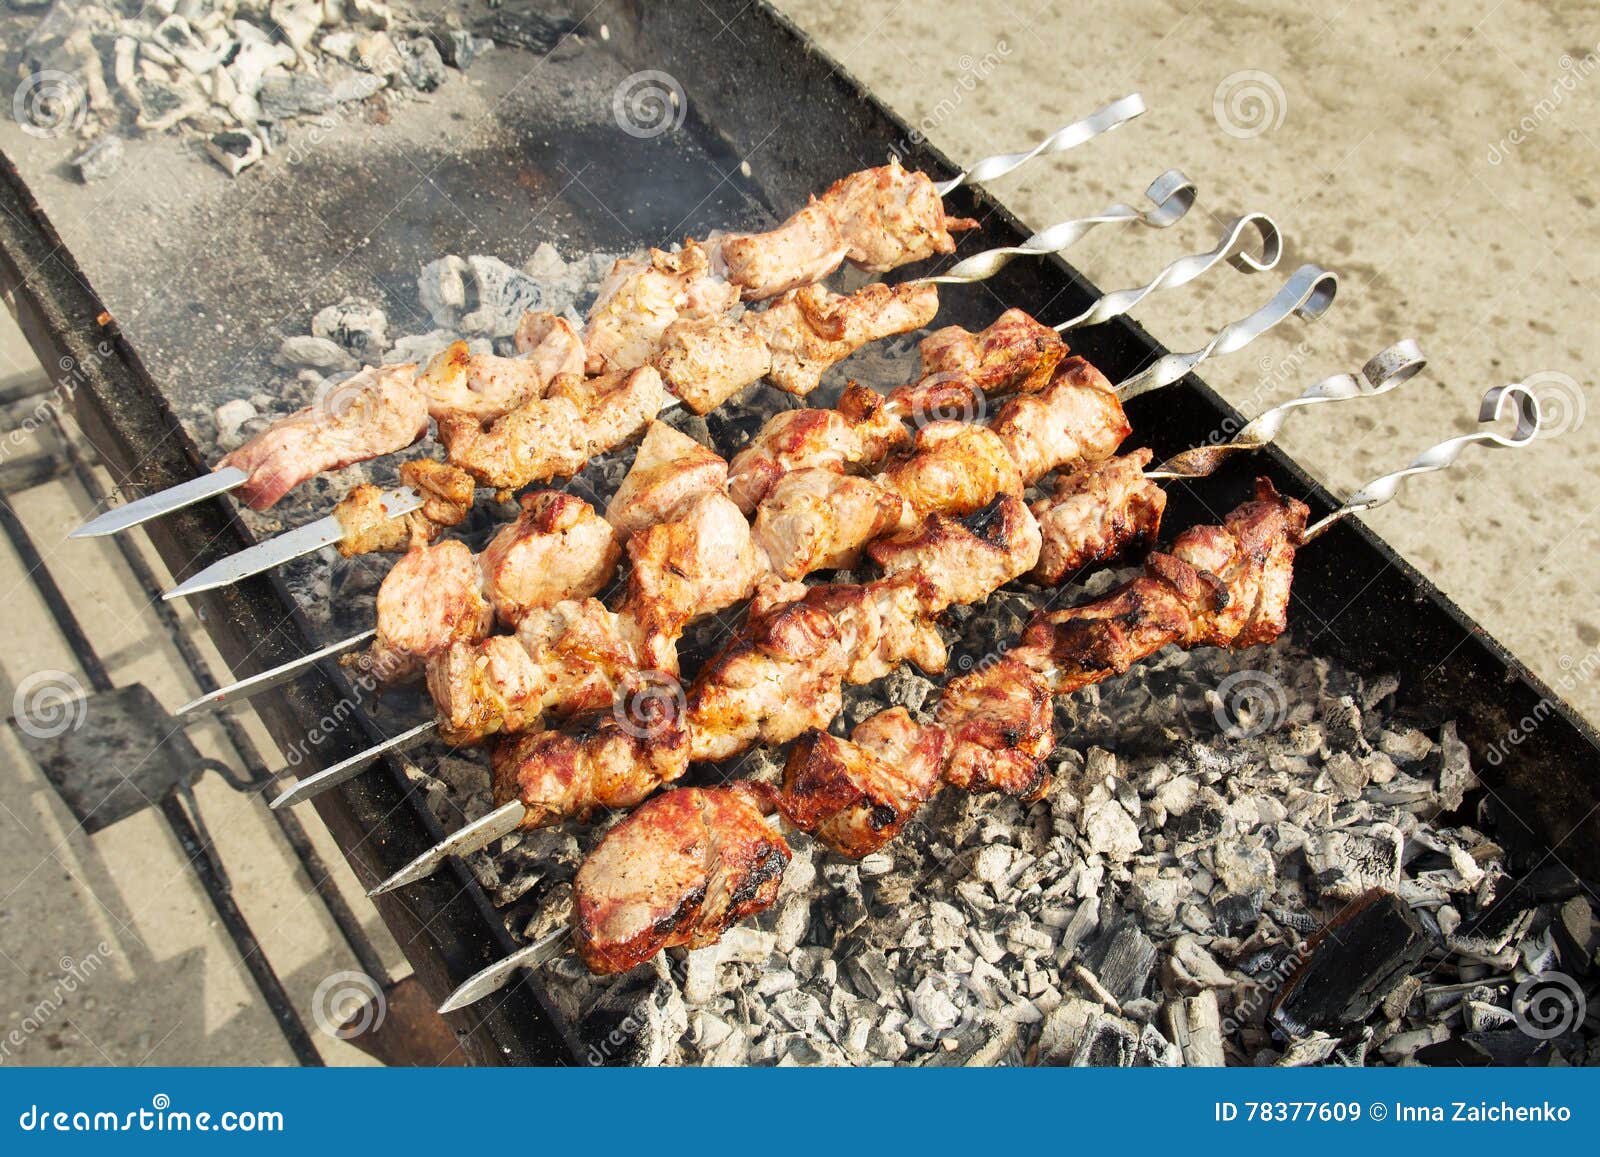 Meat roasted on skewers stock image. Image of coal, crust - 78377609